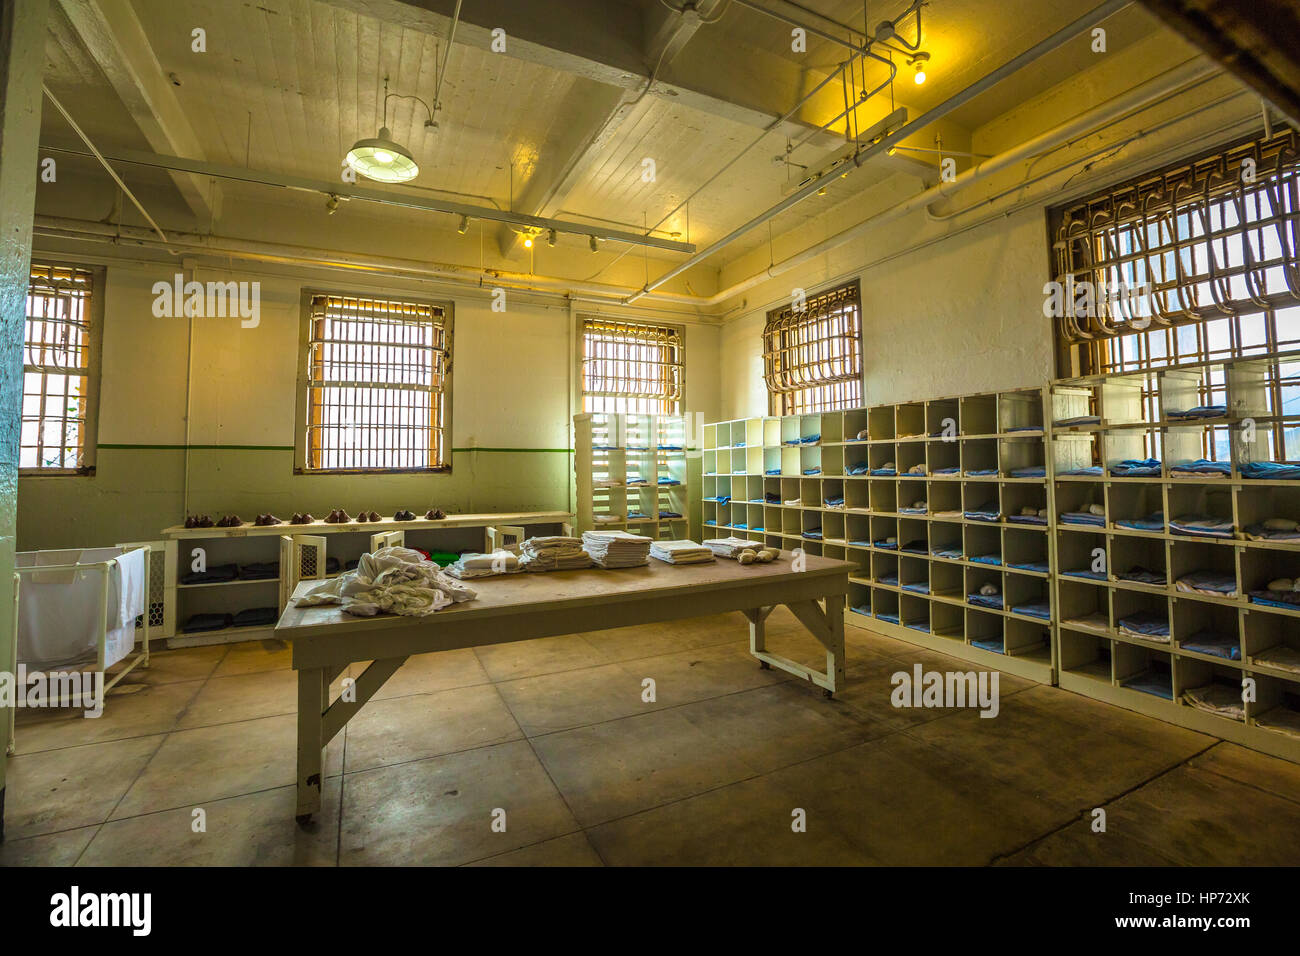 San Francisco, California, United States - August 14, 2016: Alcatraz laundry room with uniforms, linens and blankets. The Alcatraz prison are a popula Stock Photo